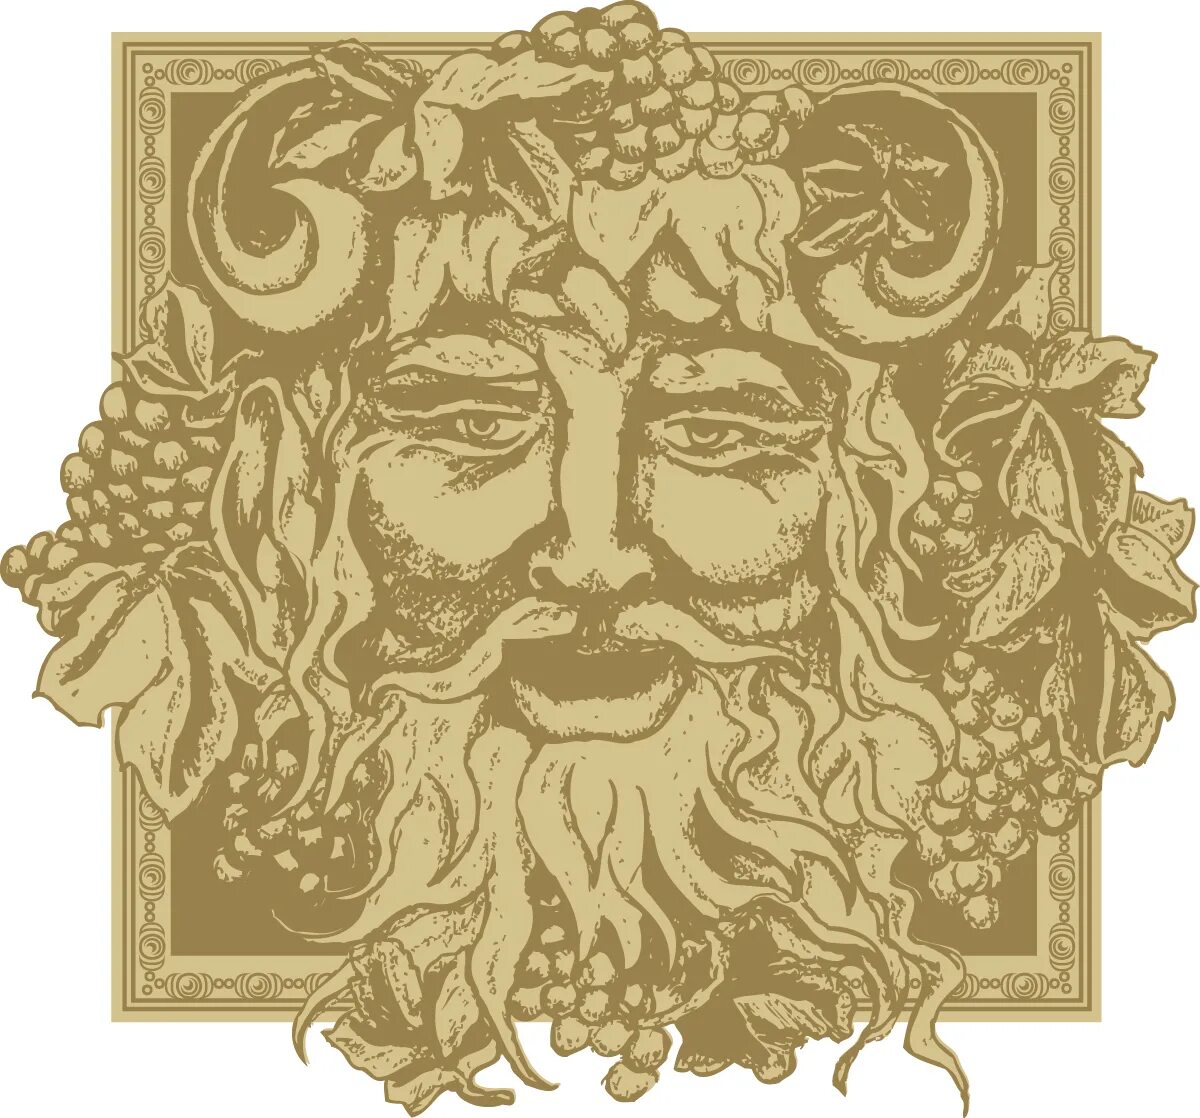 Квасура. Квасура Бог славян. Бог славянской мифологии Квасура. Славянский Бог виноделия. Бахус гравюра.